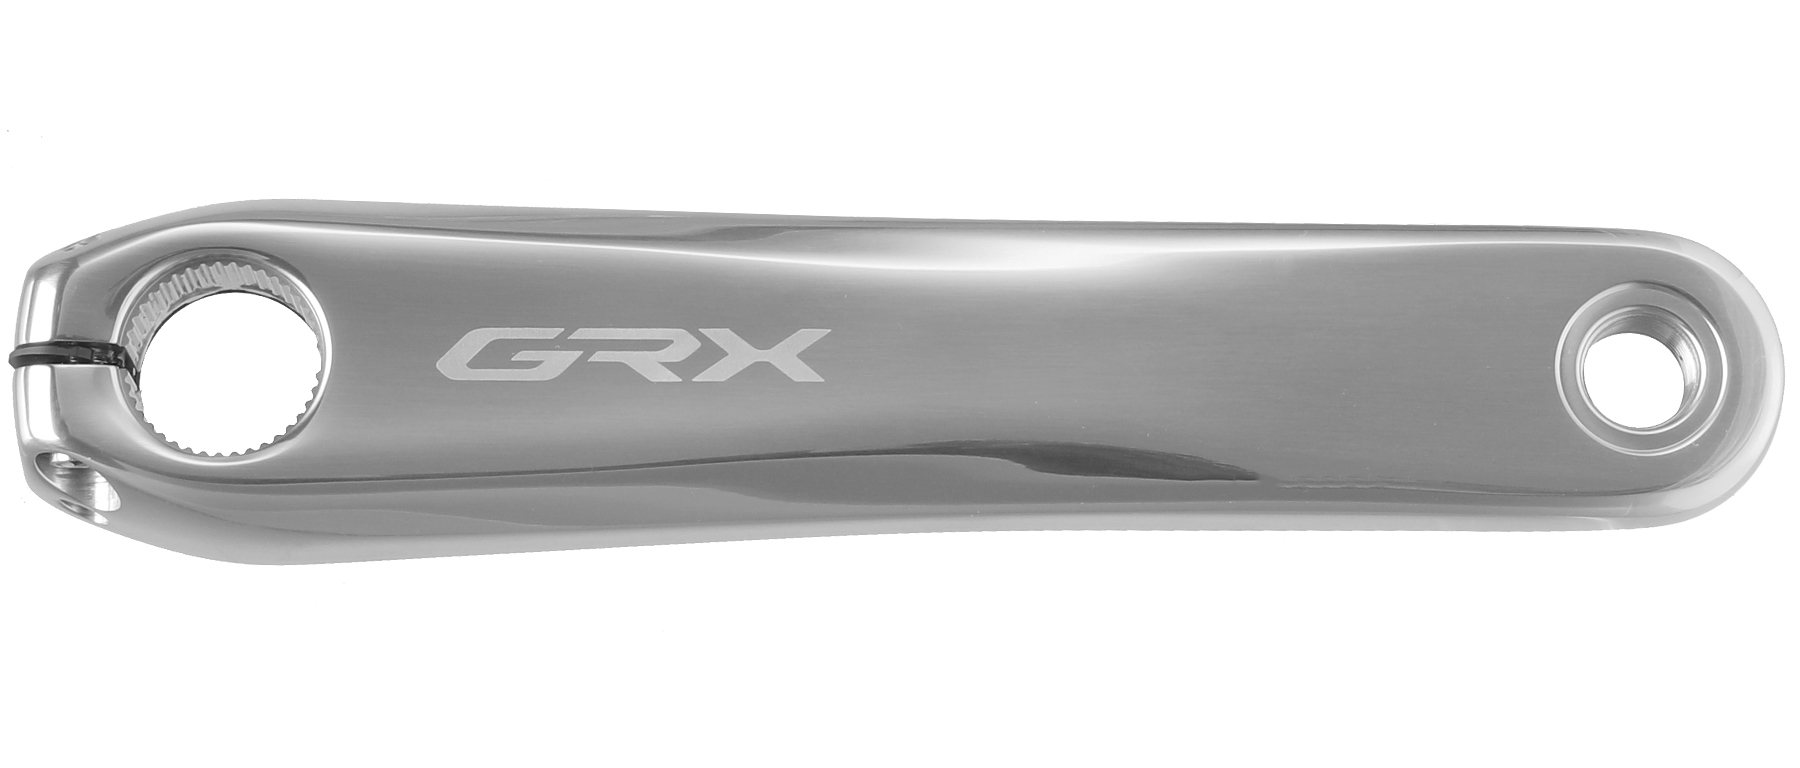 Shimano GRX Limited Edition 2x Kit